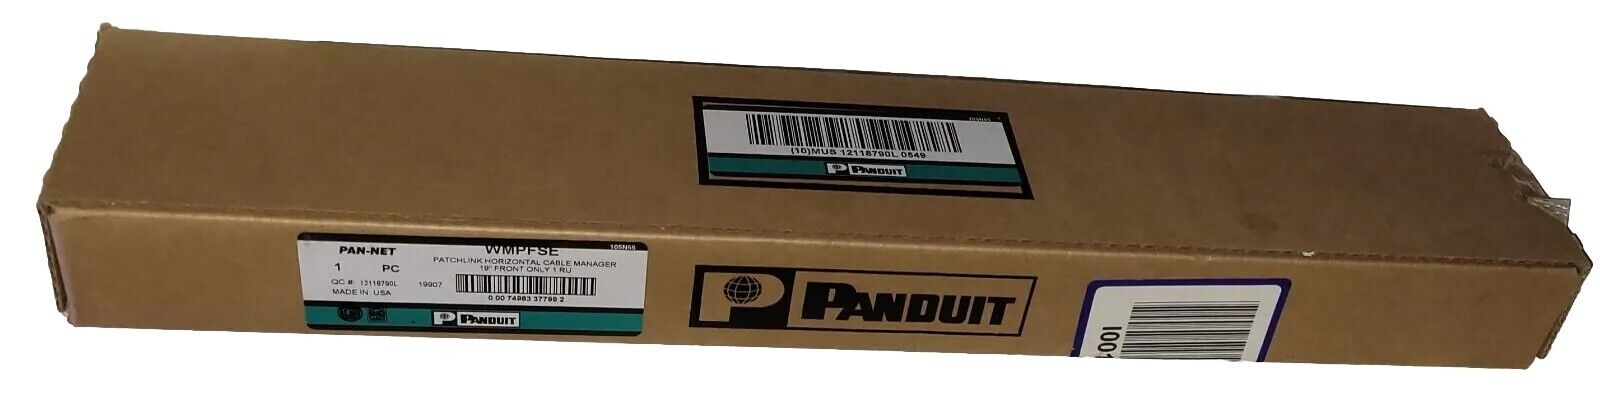 Panduit PAN-NET Patchlink Horizontal Cable Manager WMPSE , 19\